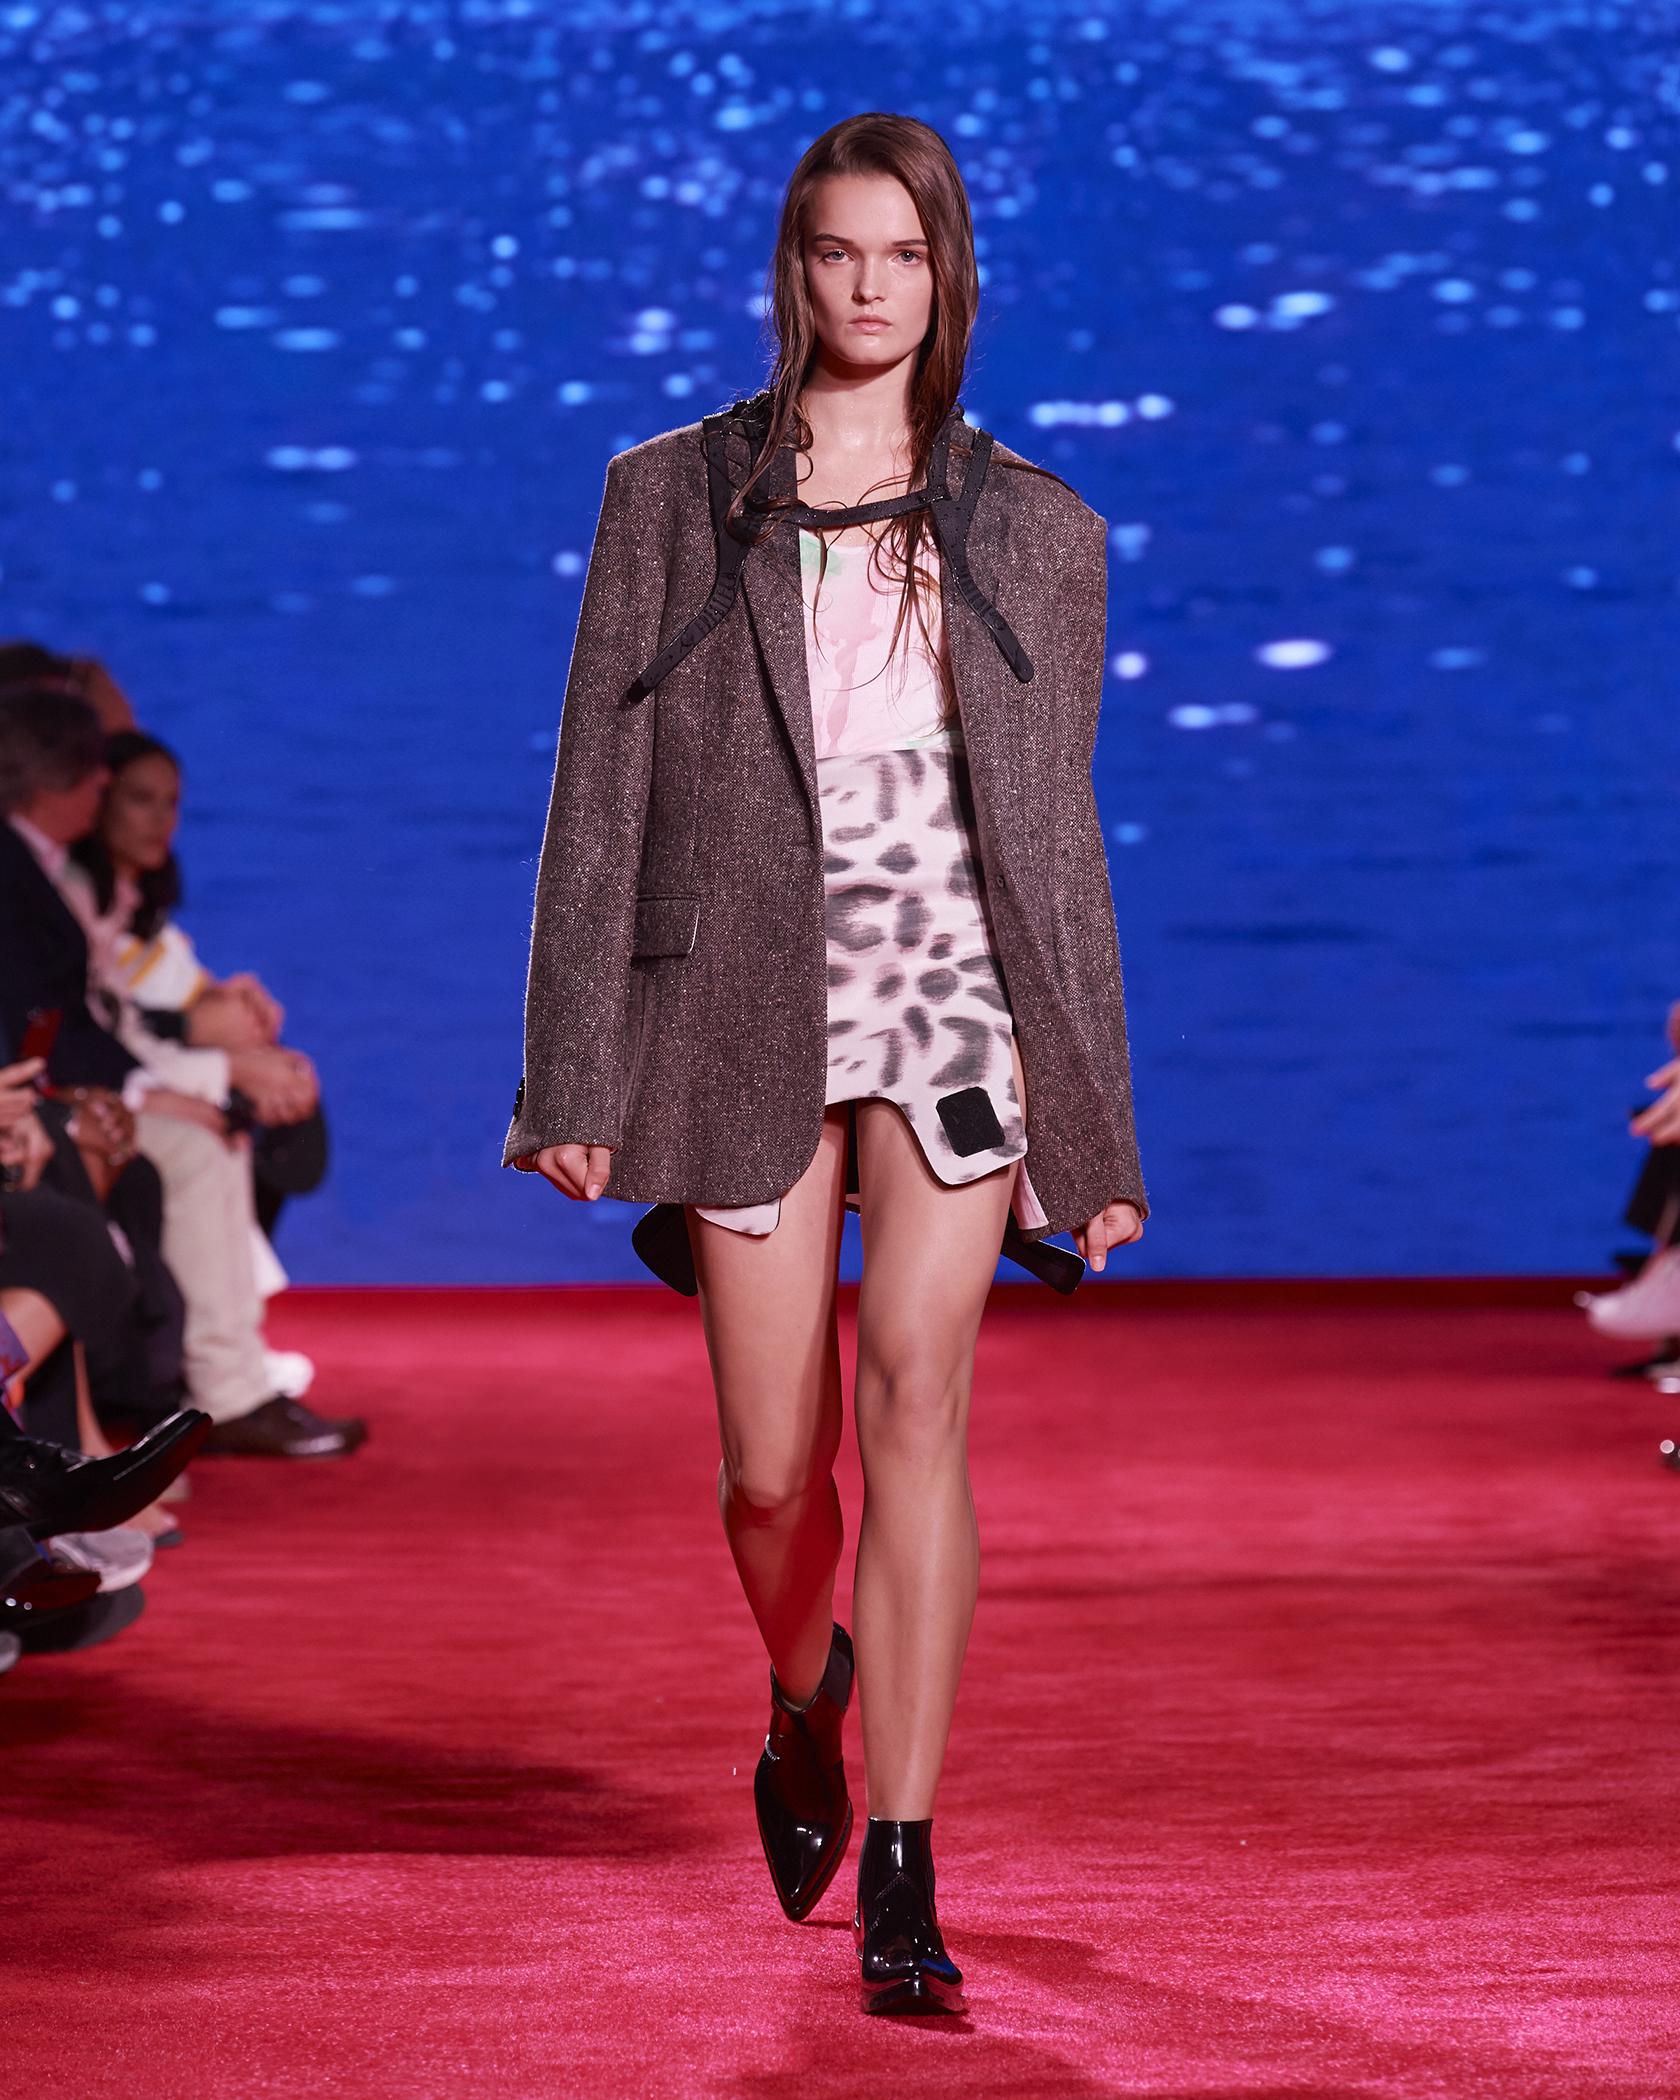 Raf Simons Gives Calvin Klein NYC Flagship a Bright, Maximalist